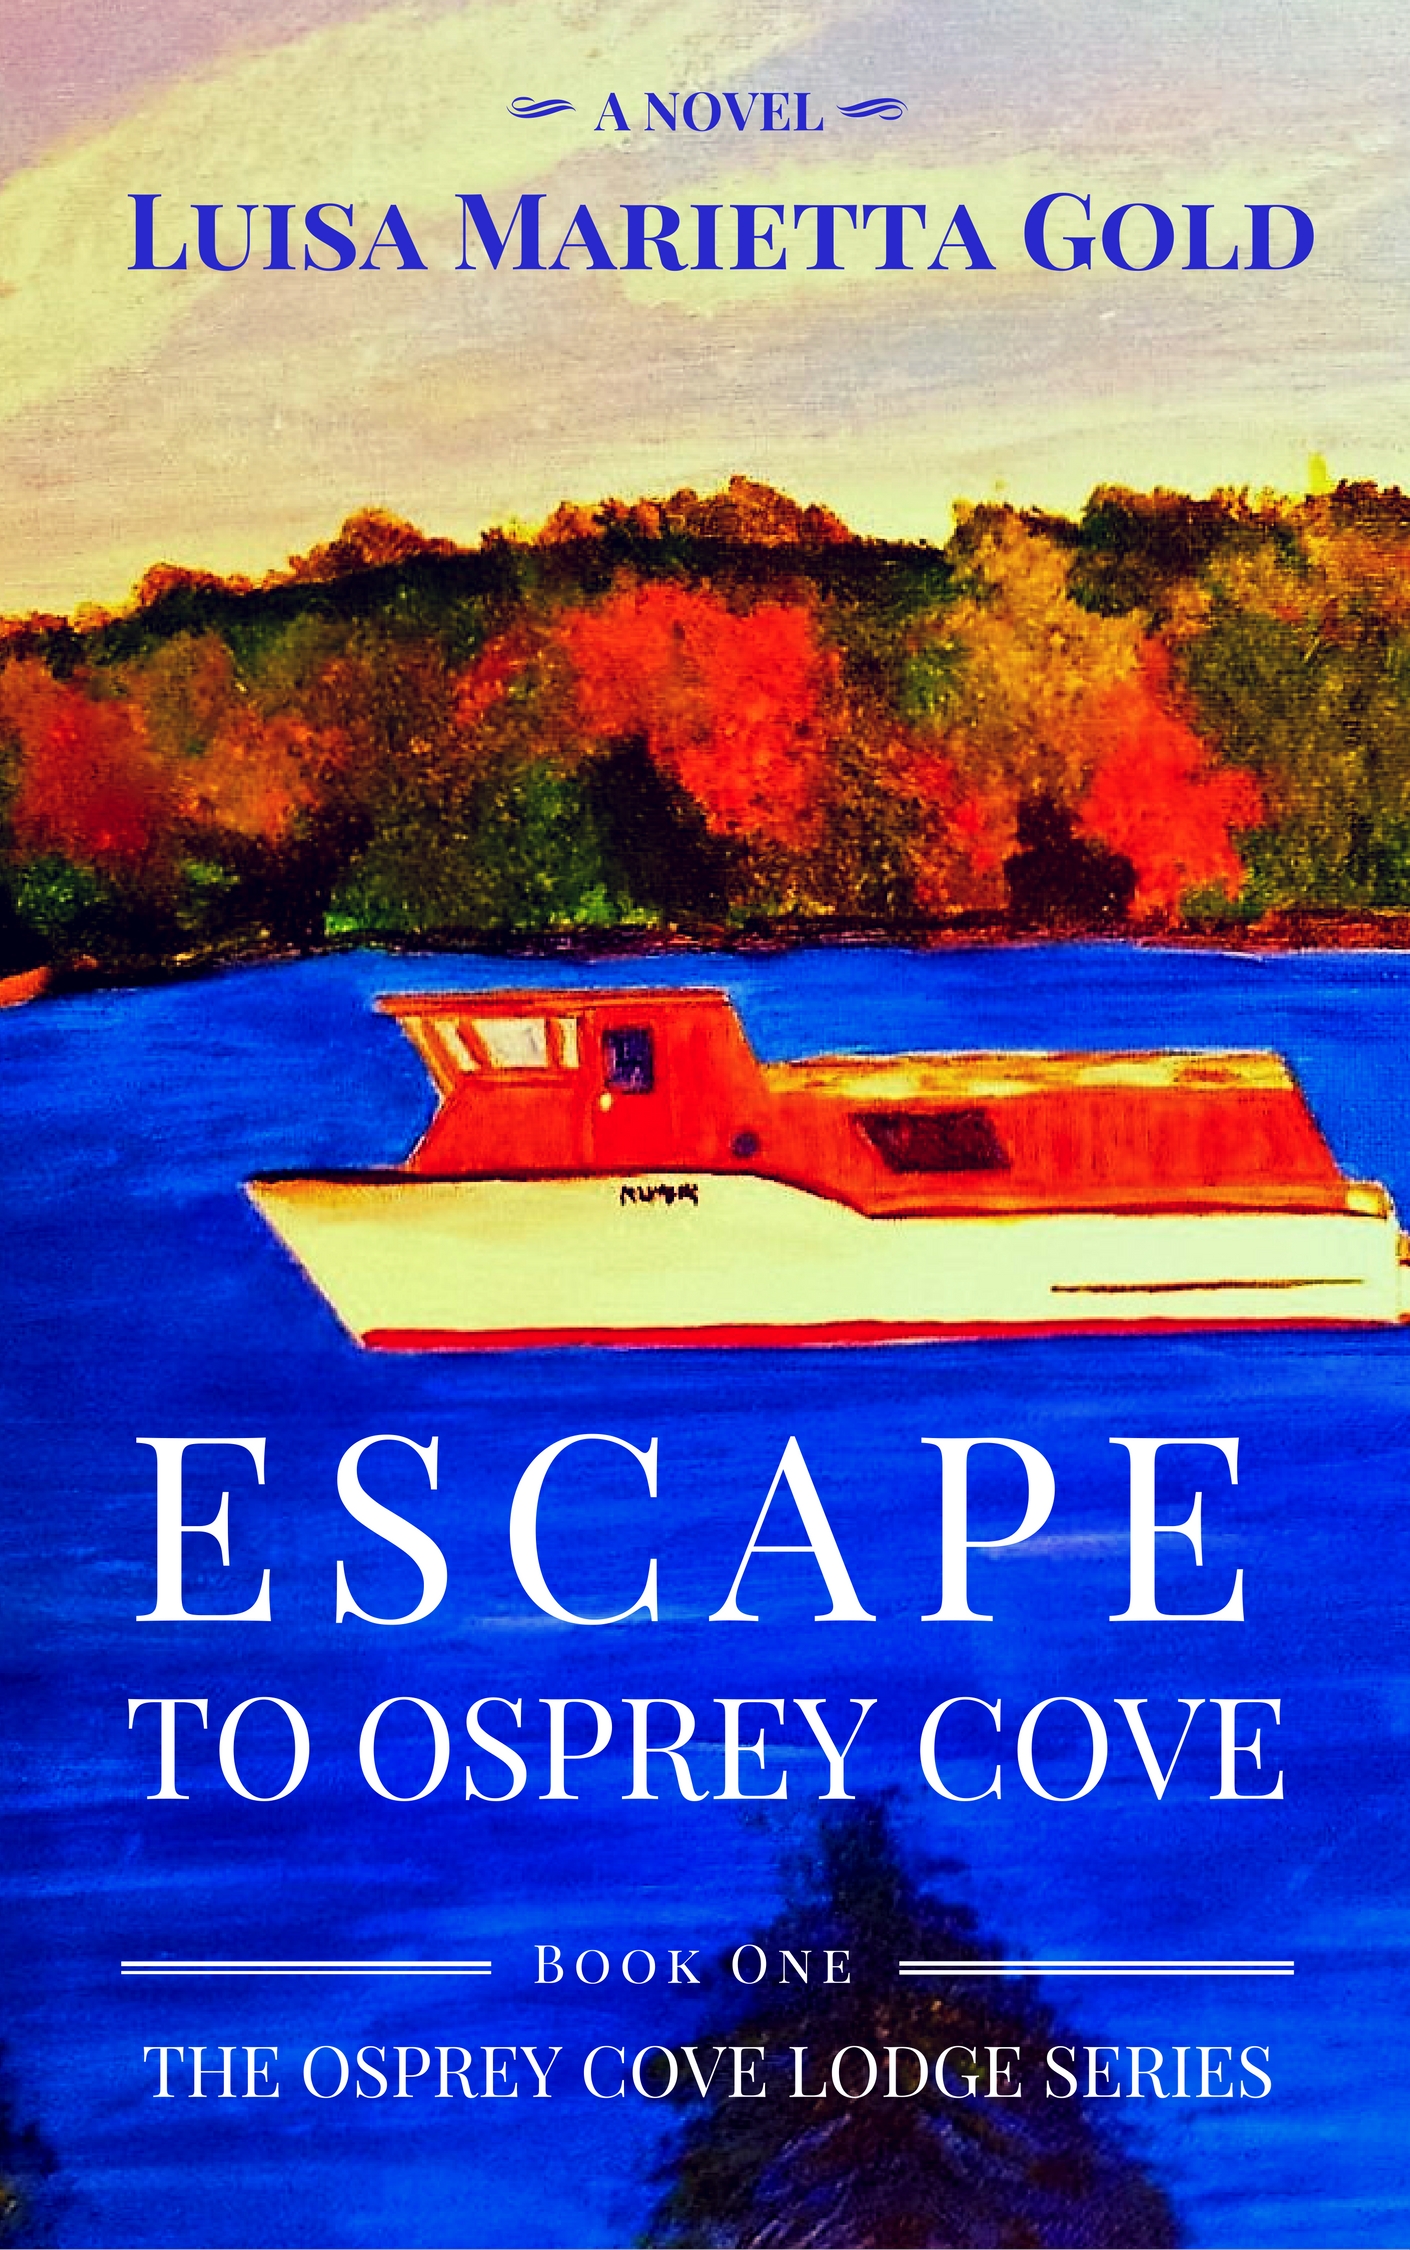 FREE: Escape to Osprey Cove by Luisa Mrrietta Gold